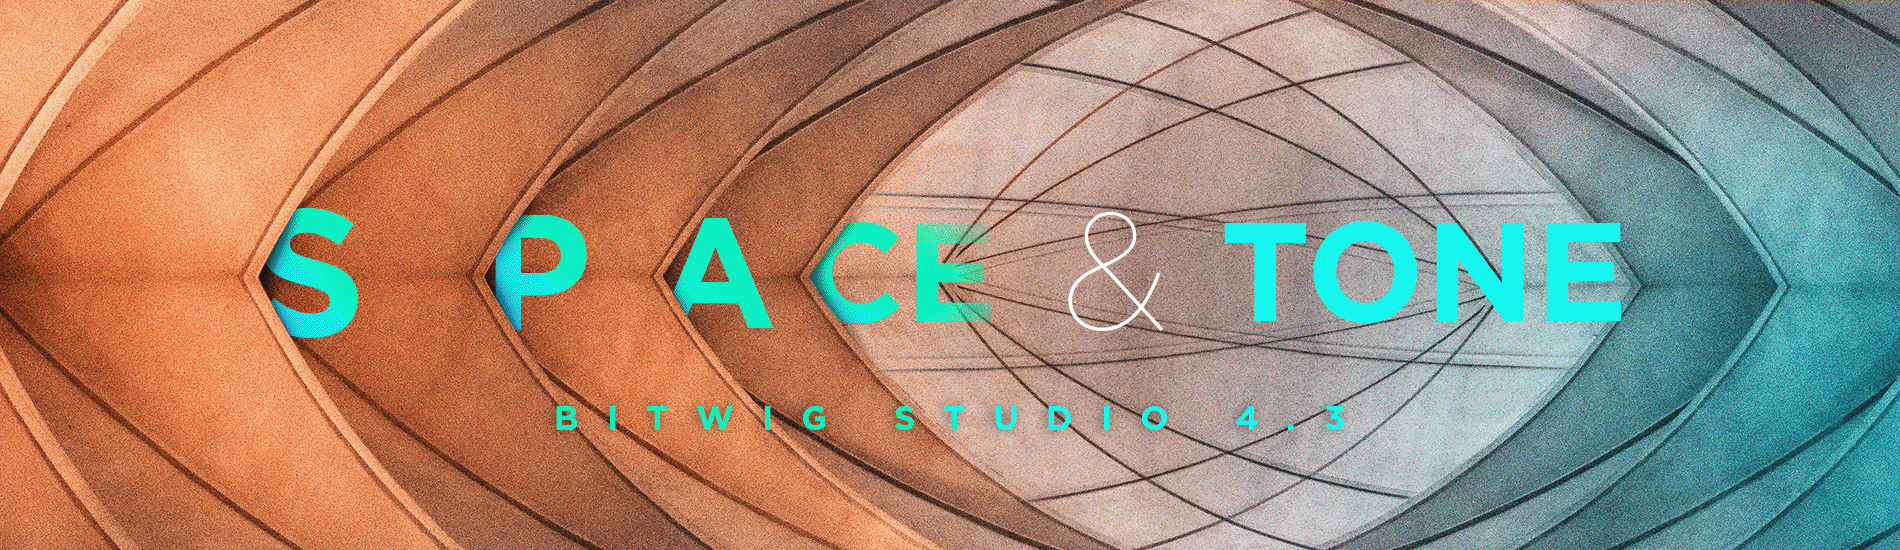 Bitwig Studio 4.3: Space & Tone